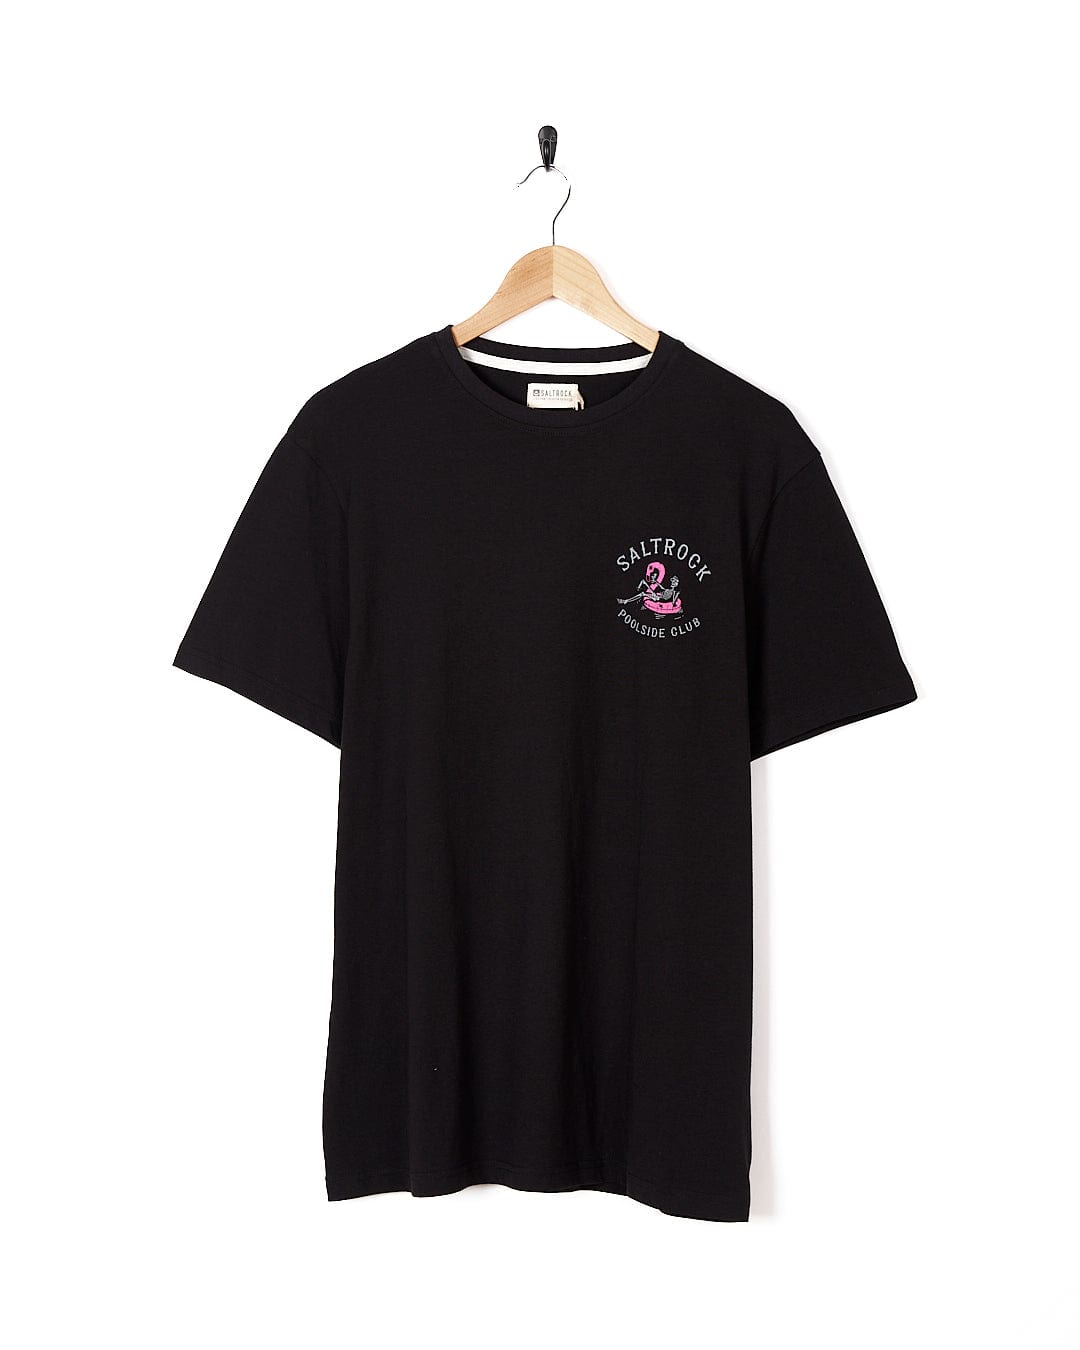 A Poolside - Women's Short Sleeve T-Shirt - Black with a pink flower on it. (Saltrock)